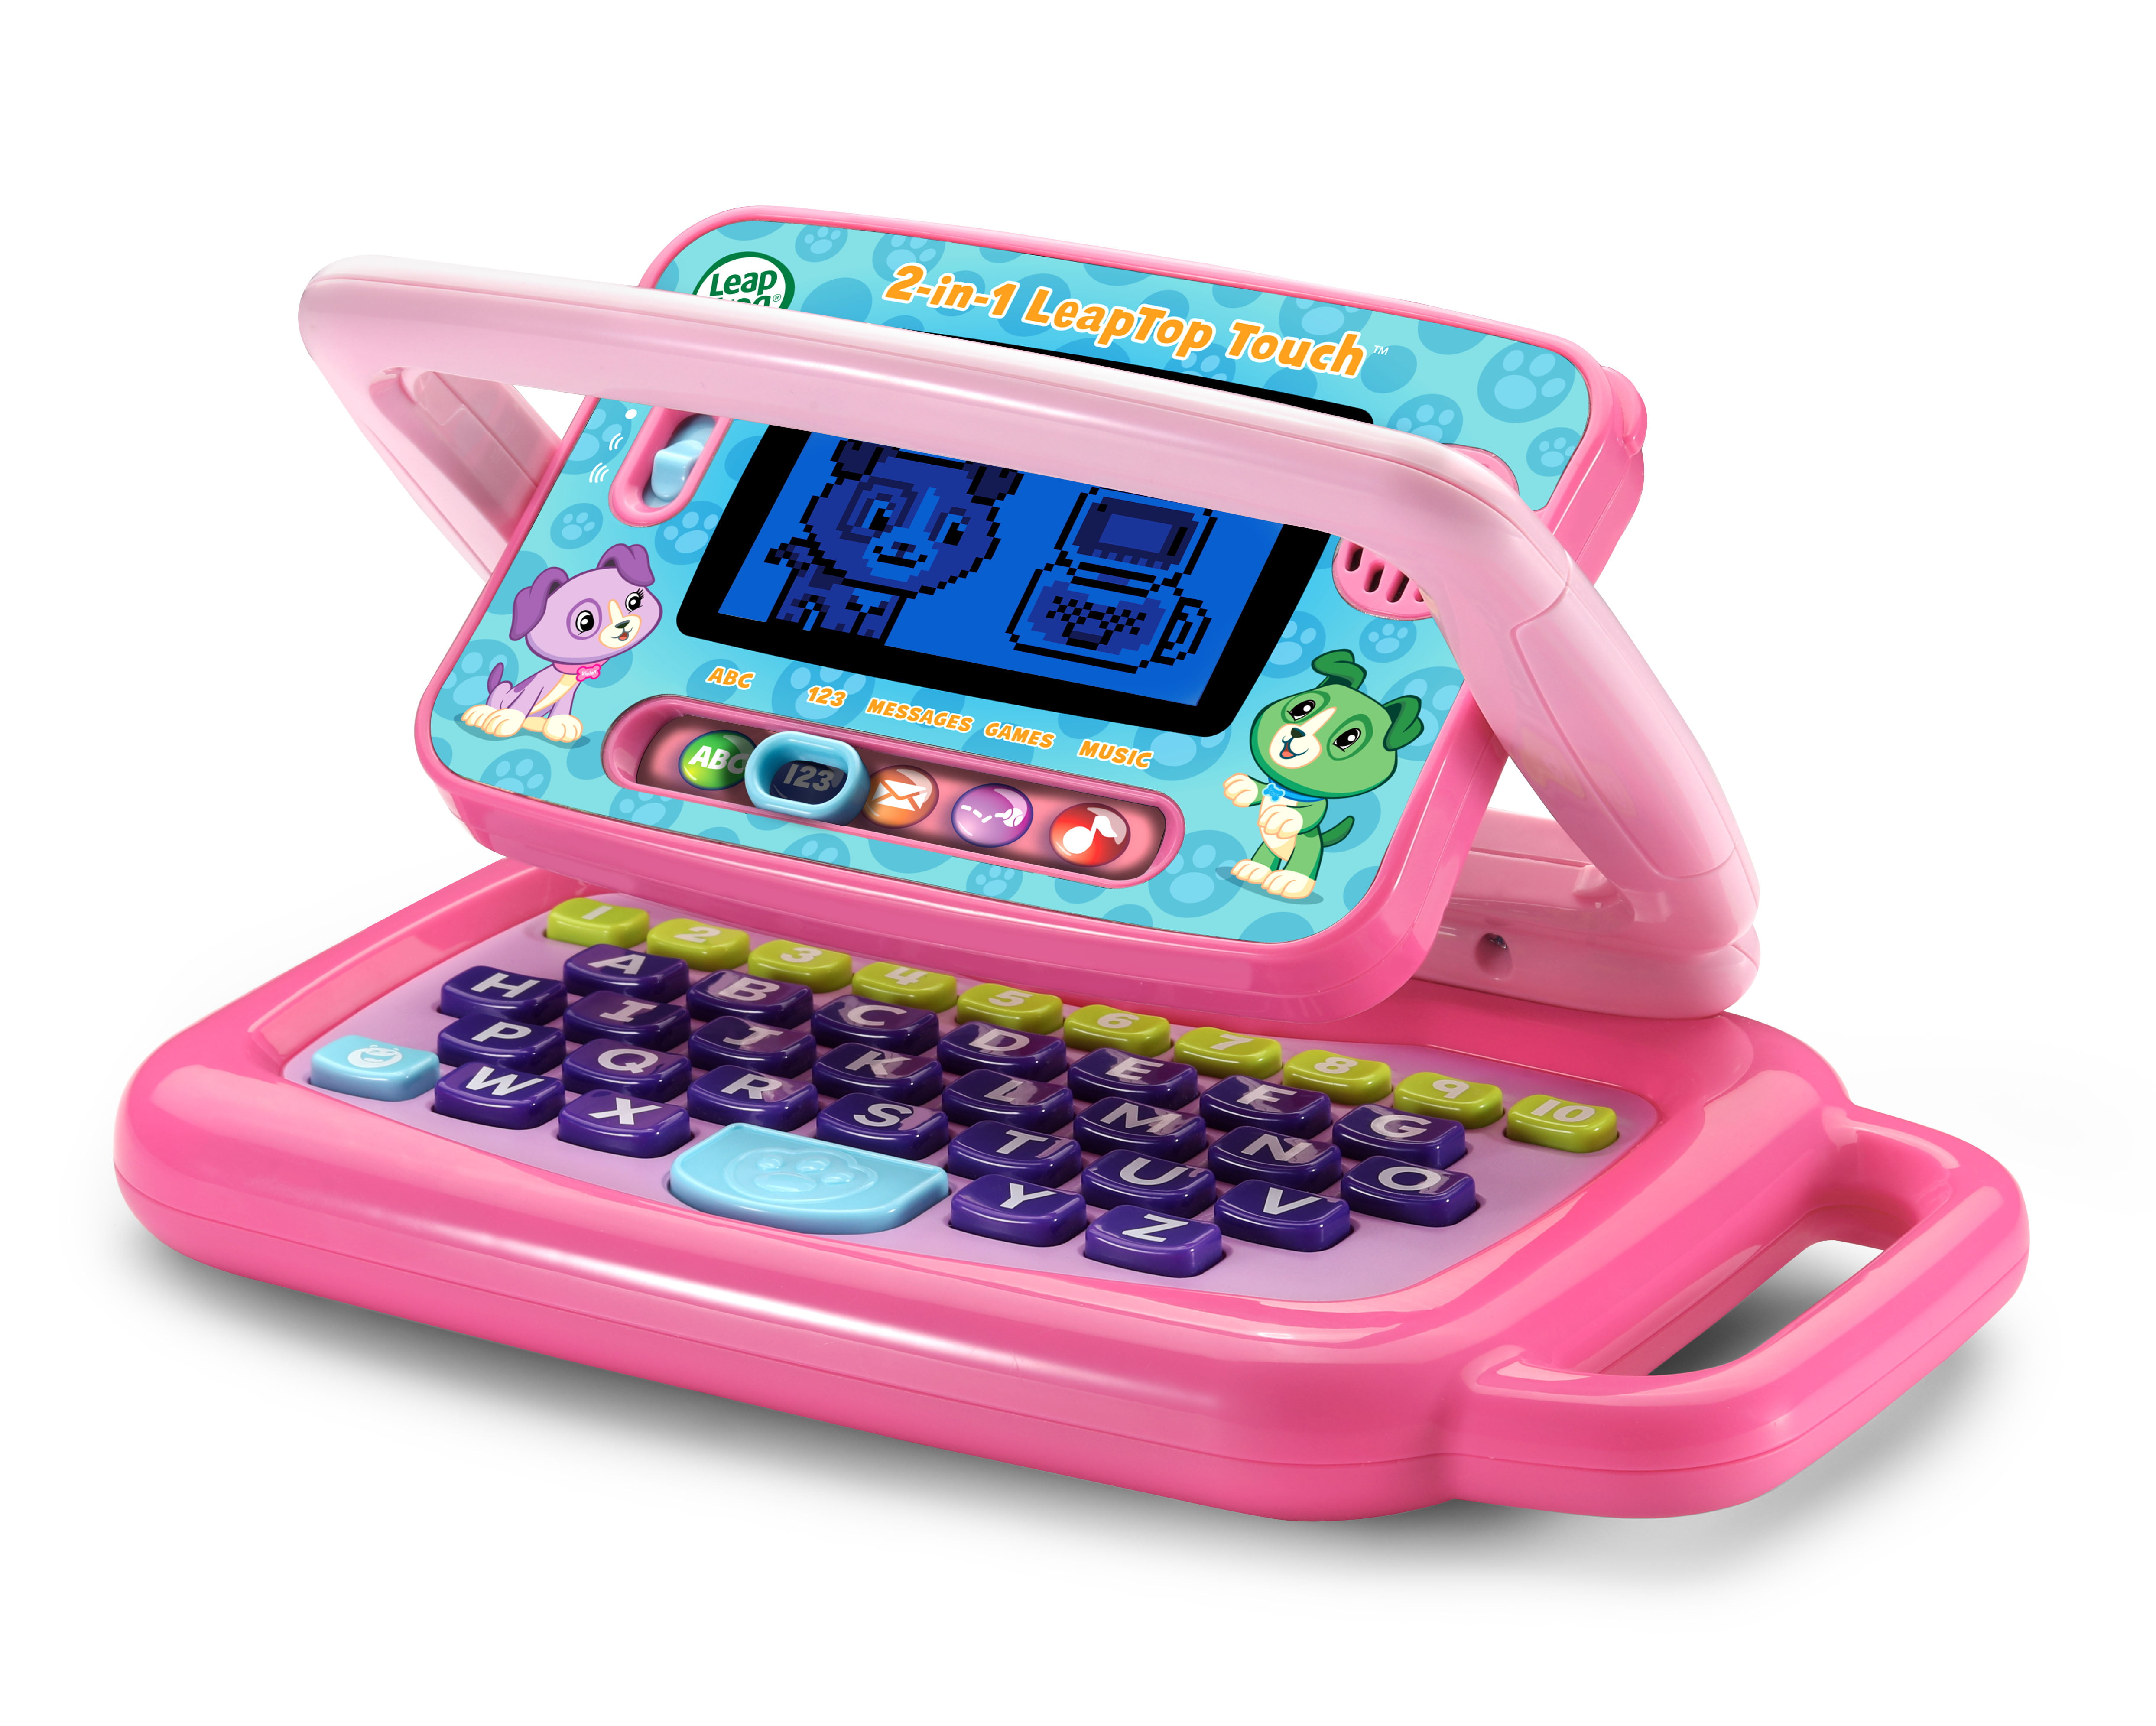 leapfrog laptop for toddlers